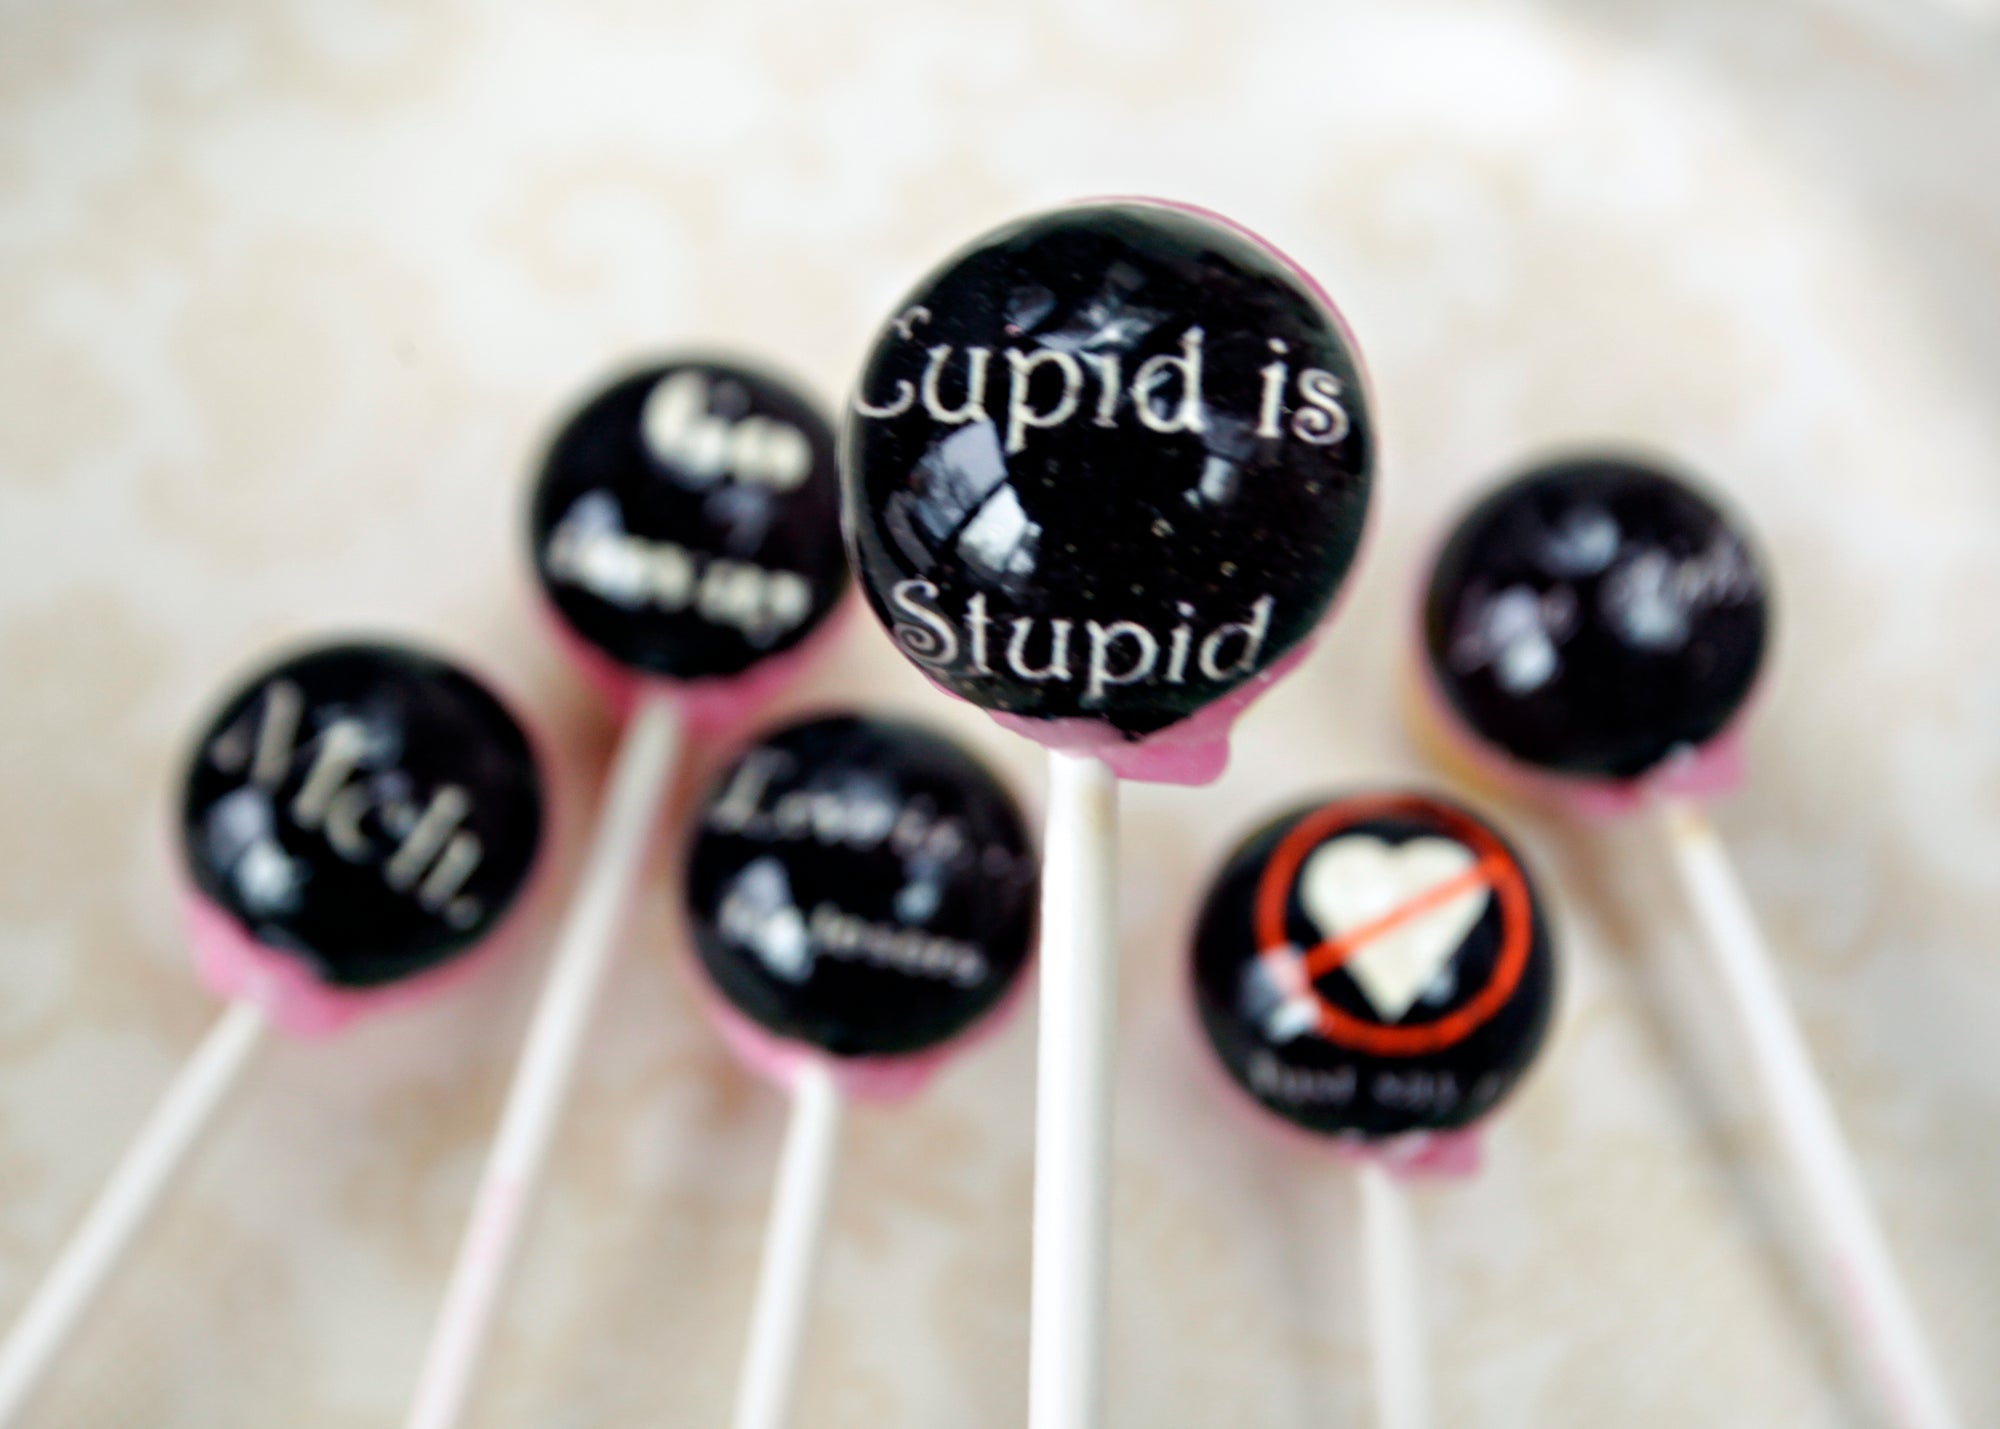 Anti-Valentine's Day Lollipops 6-piece set by I Want Candy!